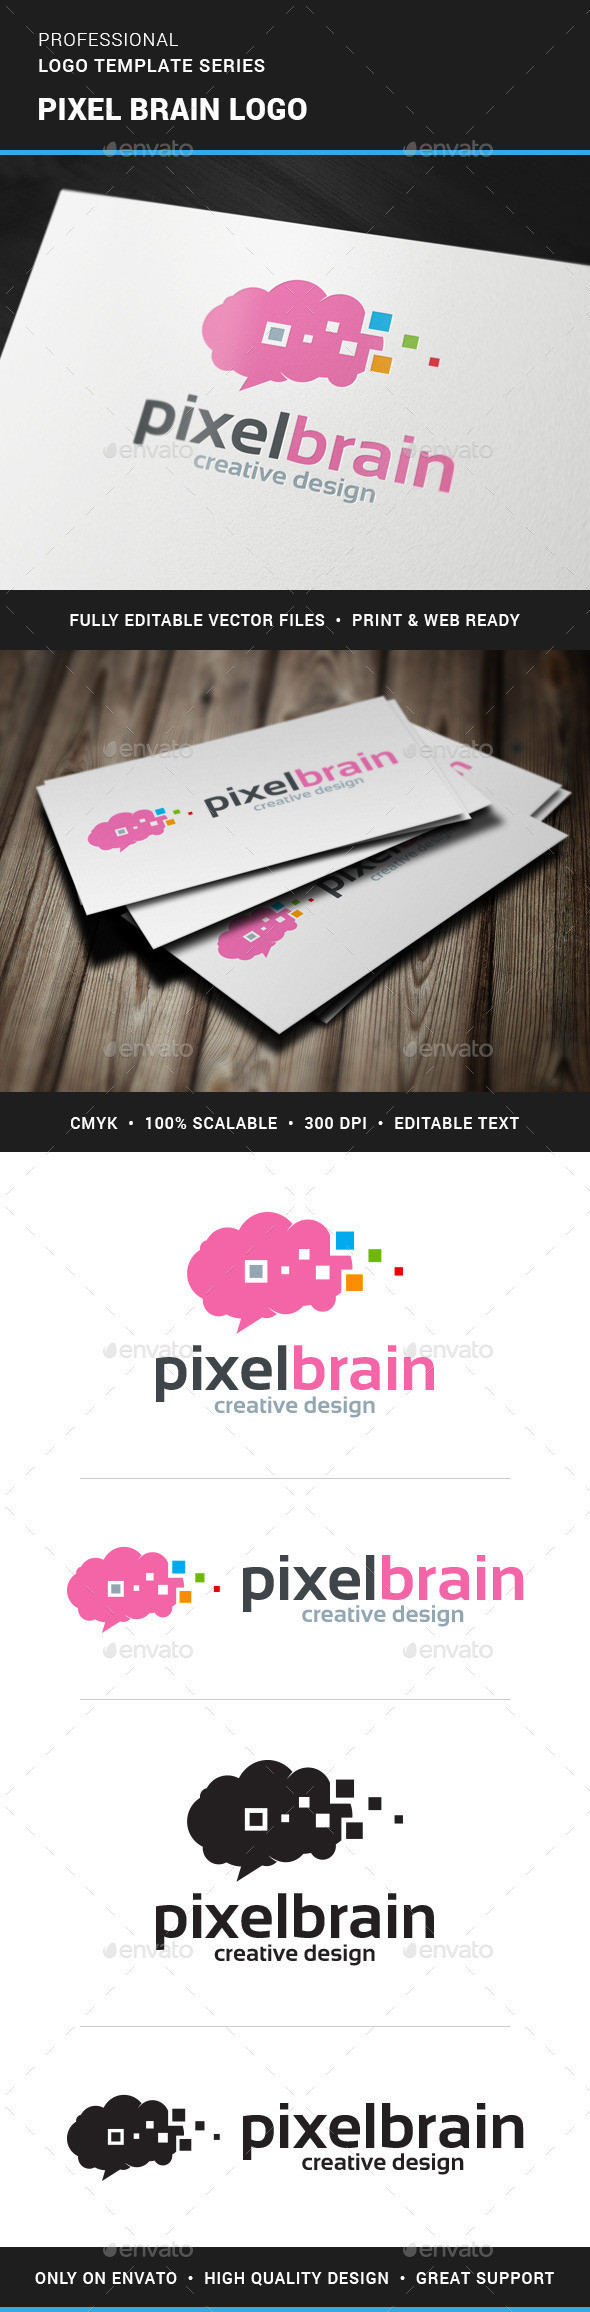 Pixel brain logo template